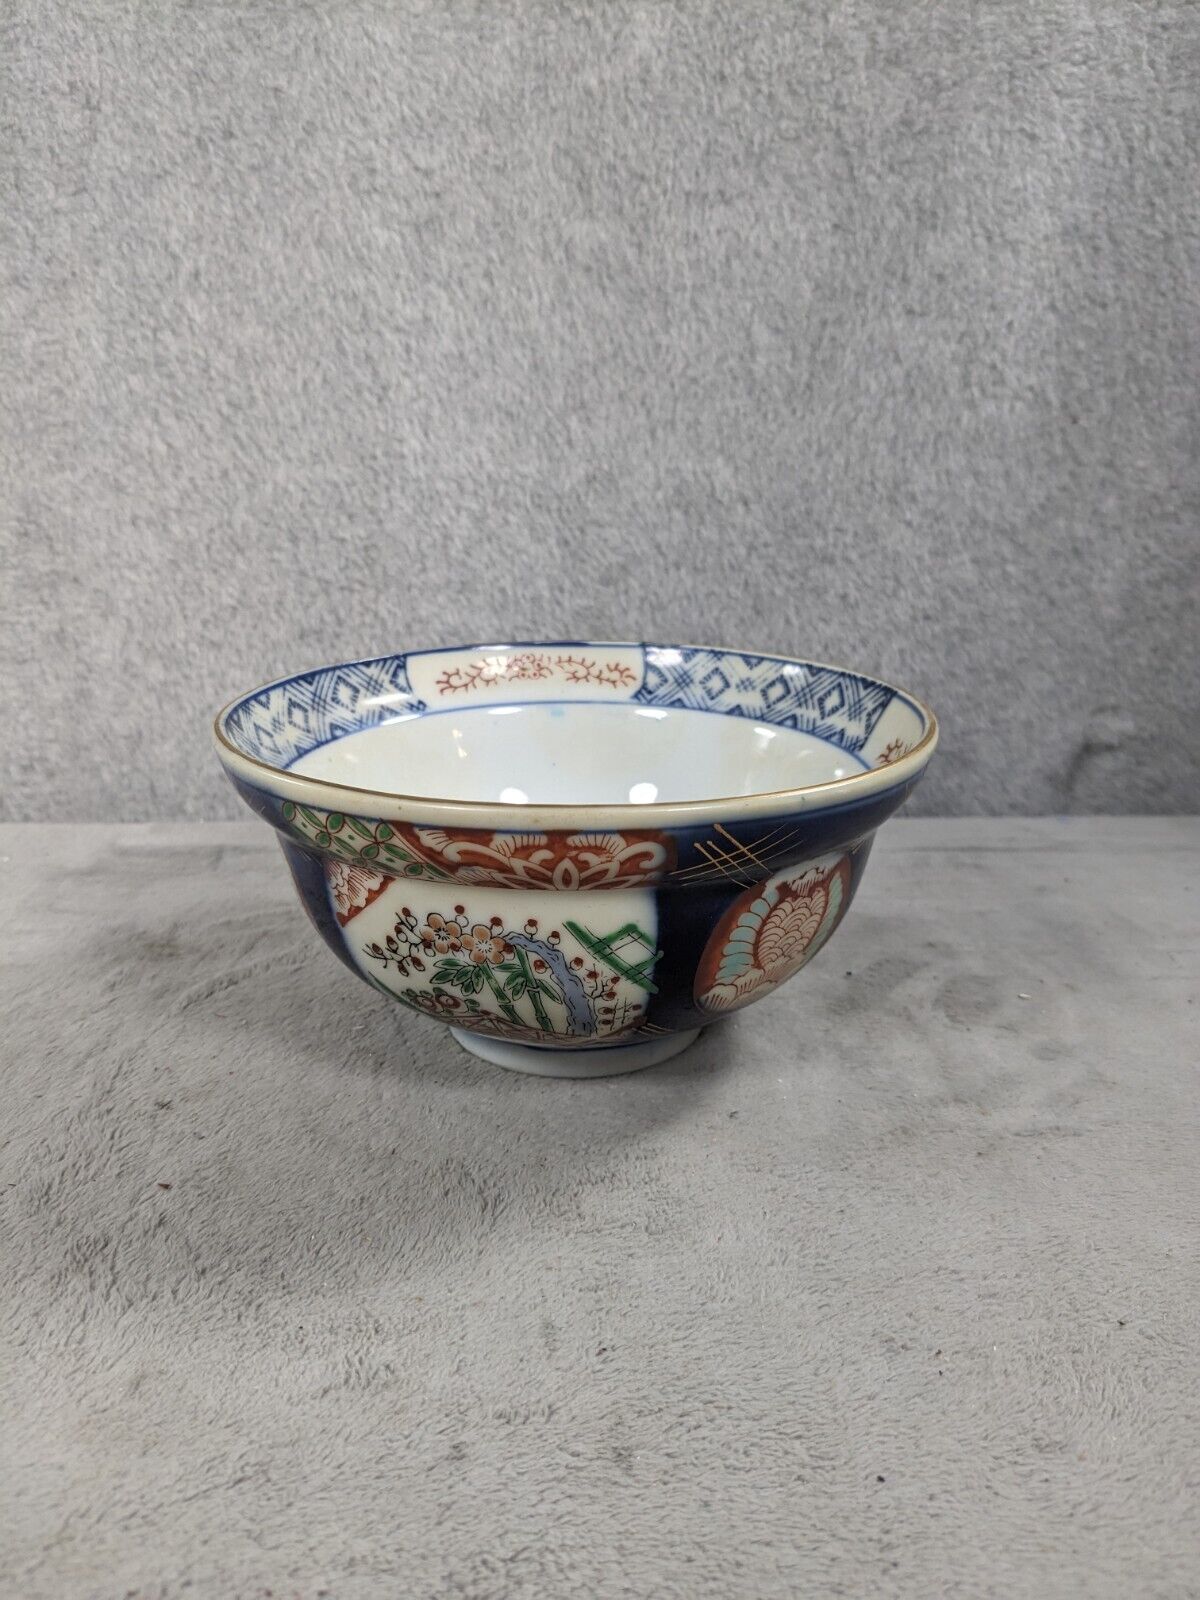 Antique Japanese Madein Japan Porcelain Rice Bowl ~ Japan